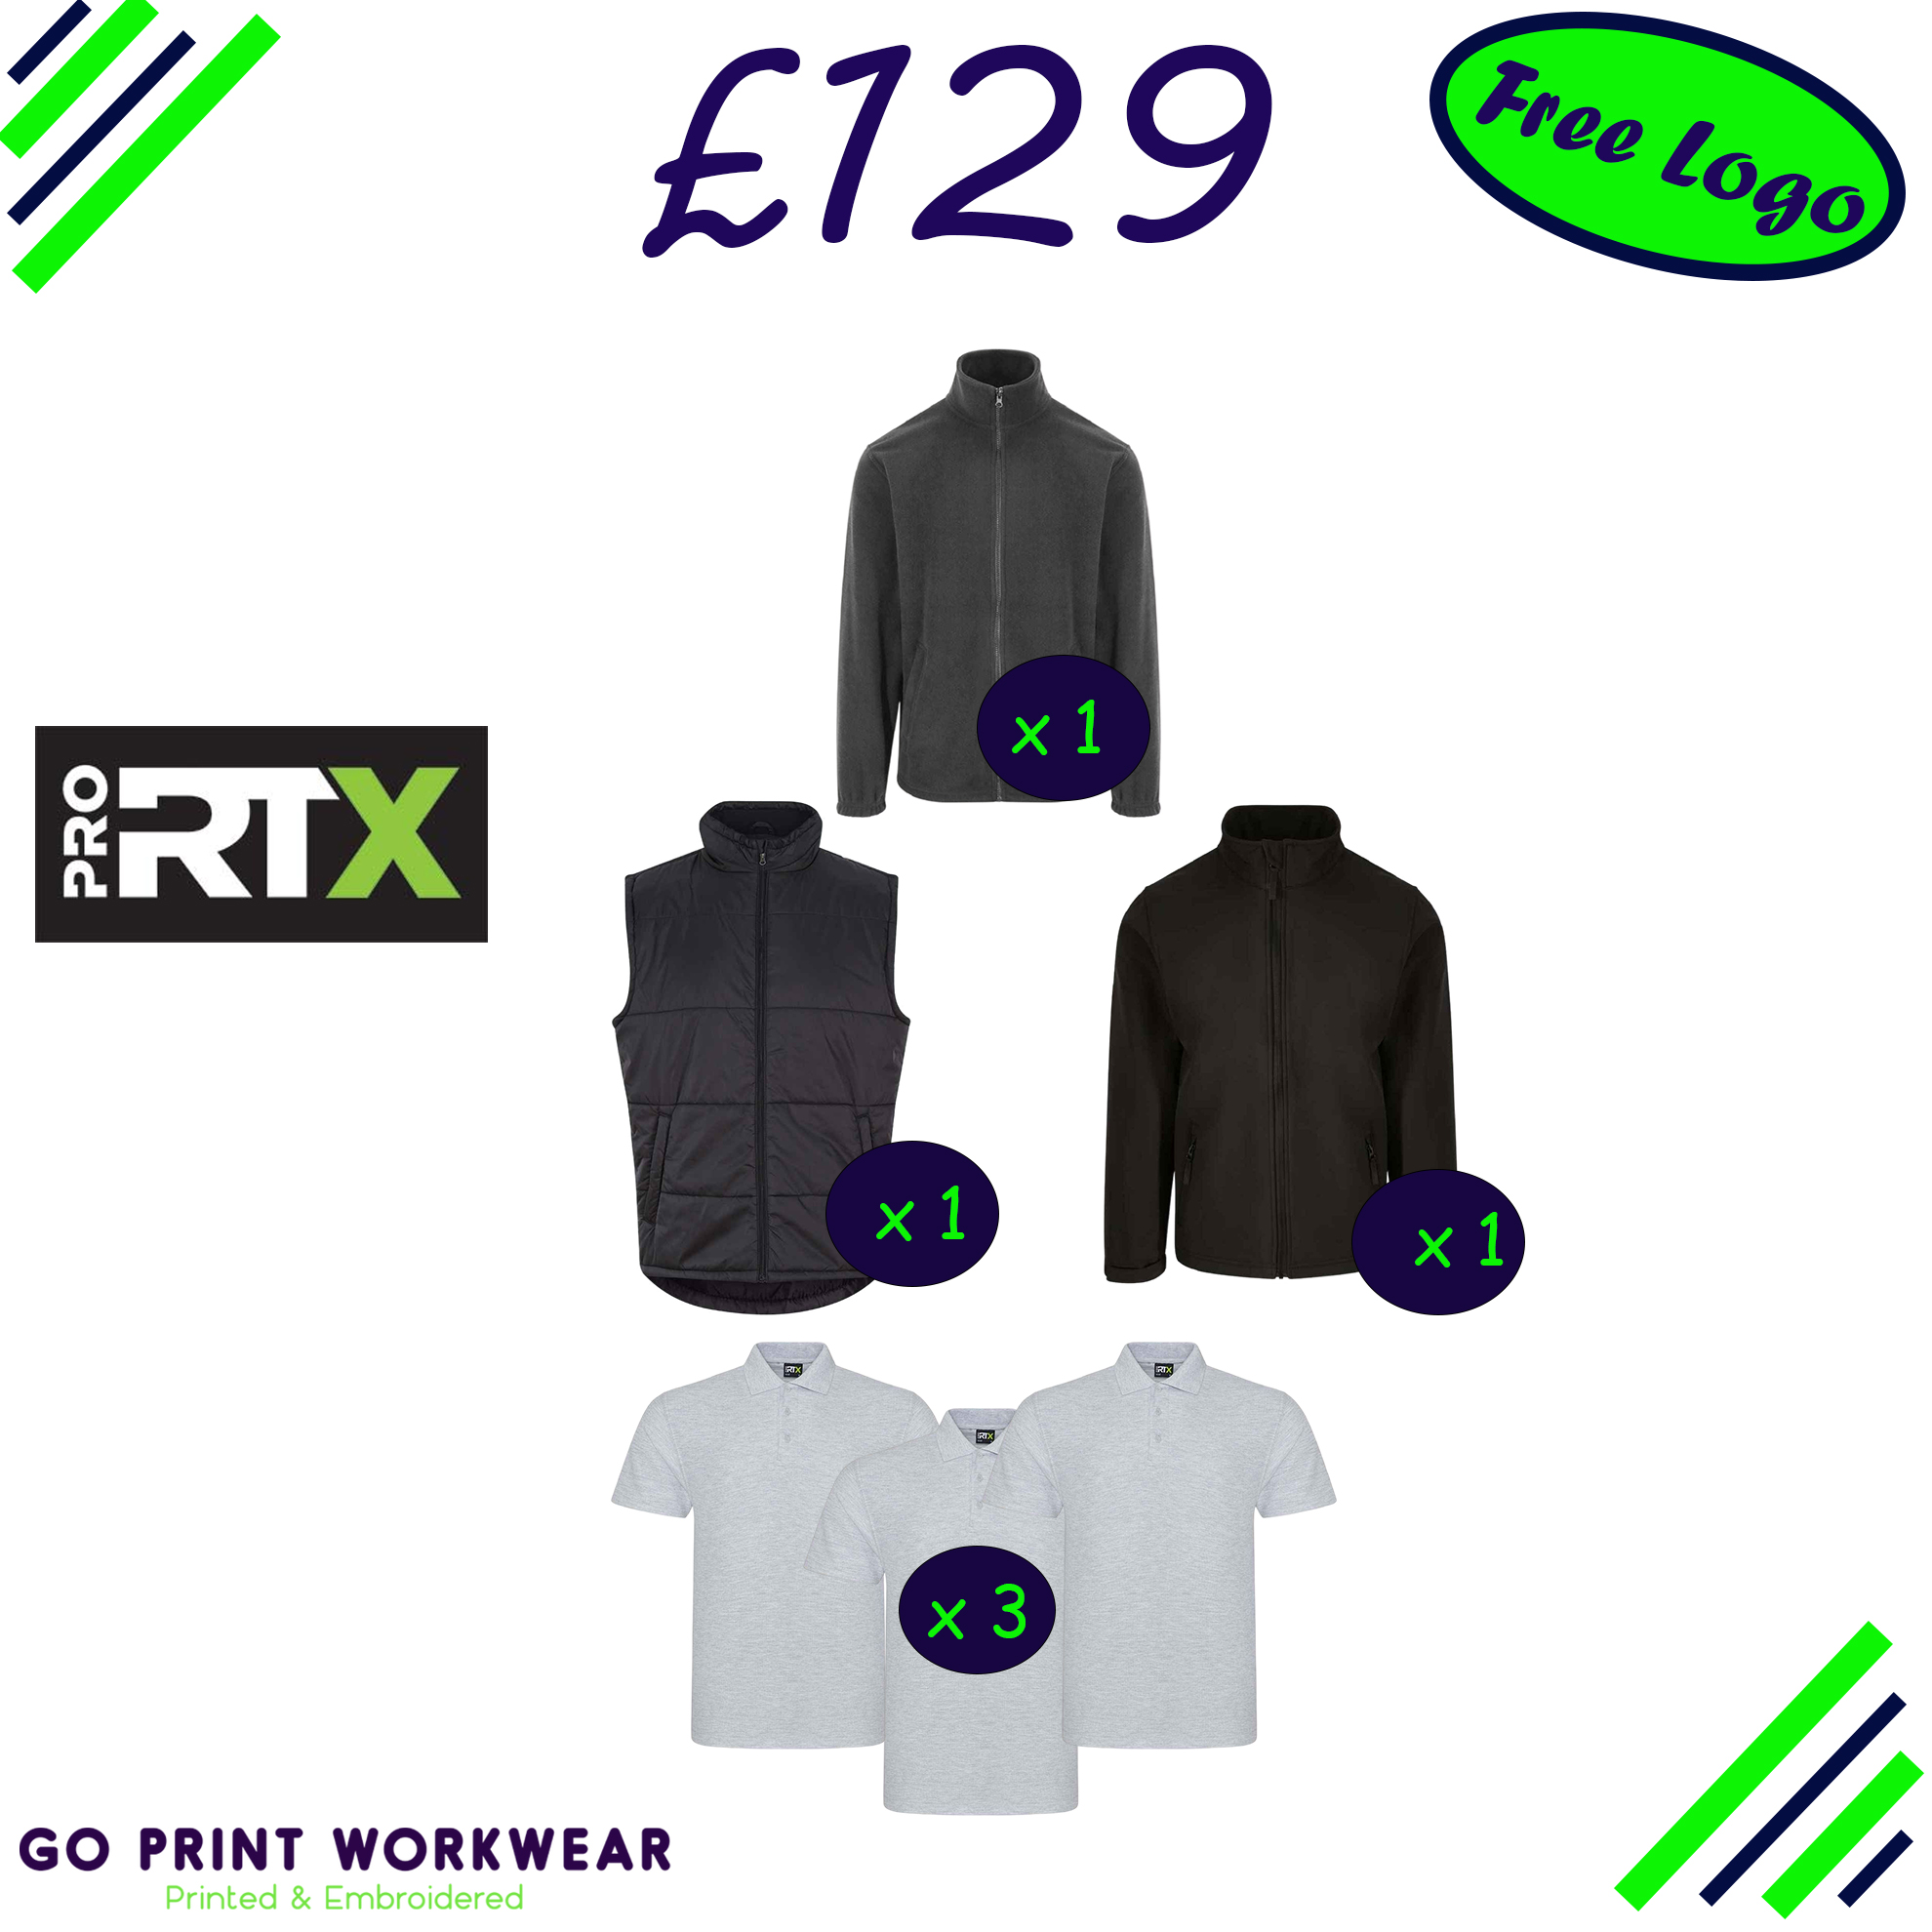 Pro RTX Workwear Bundle K